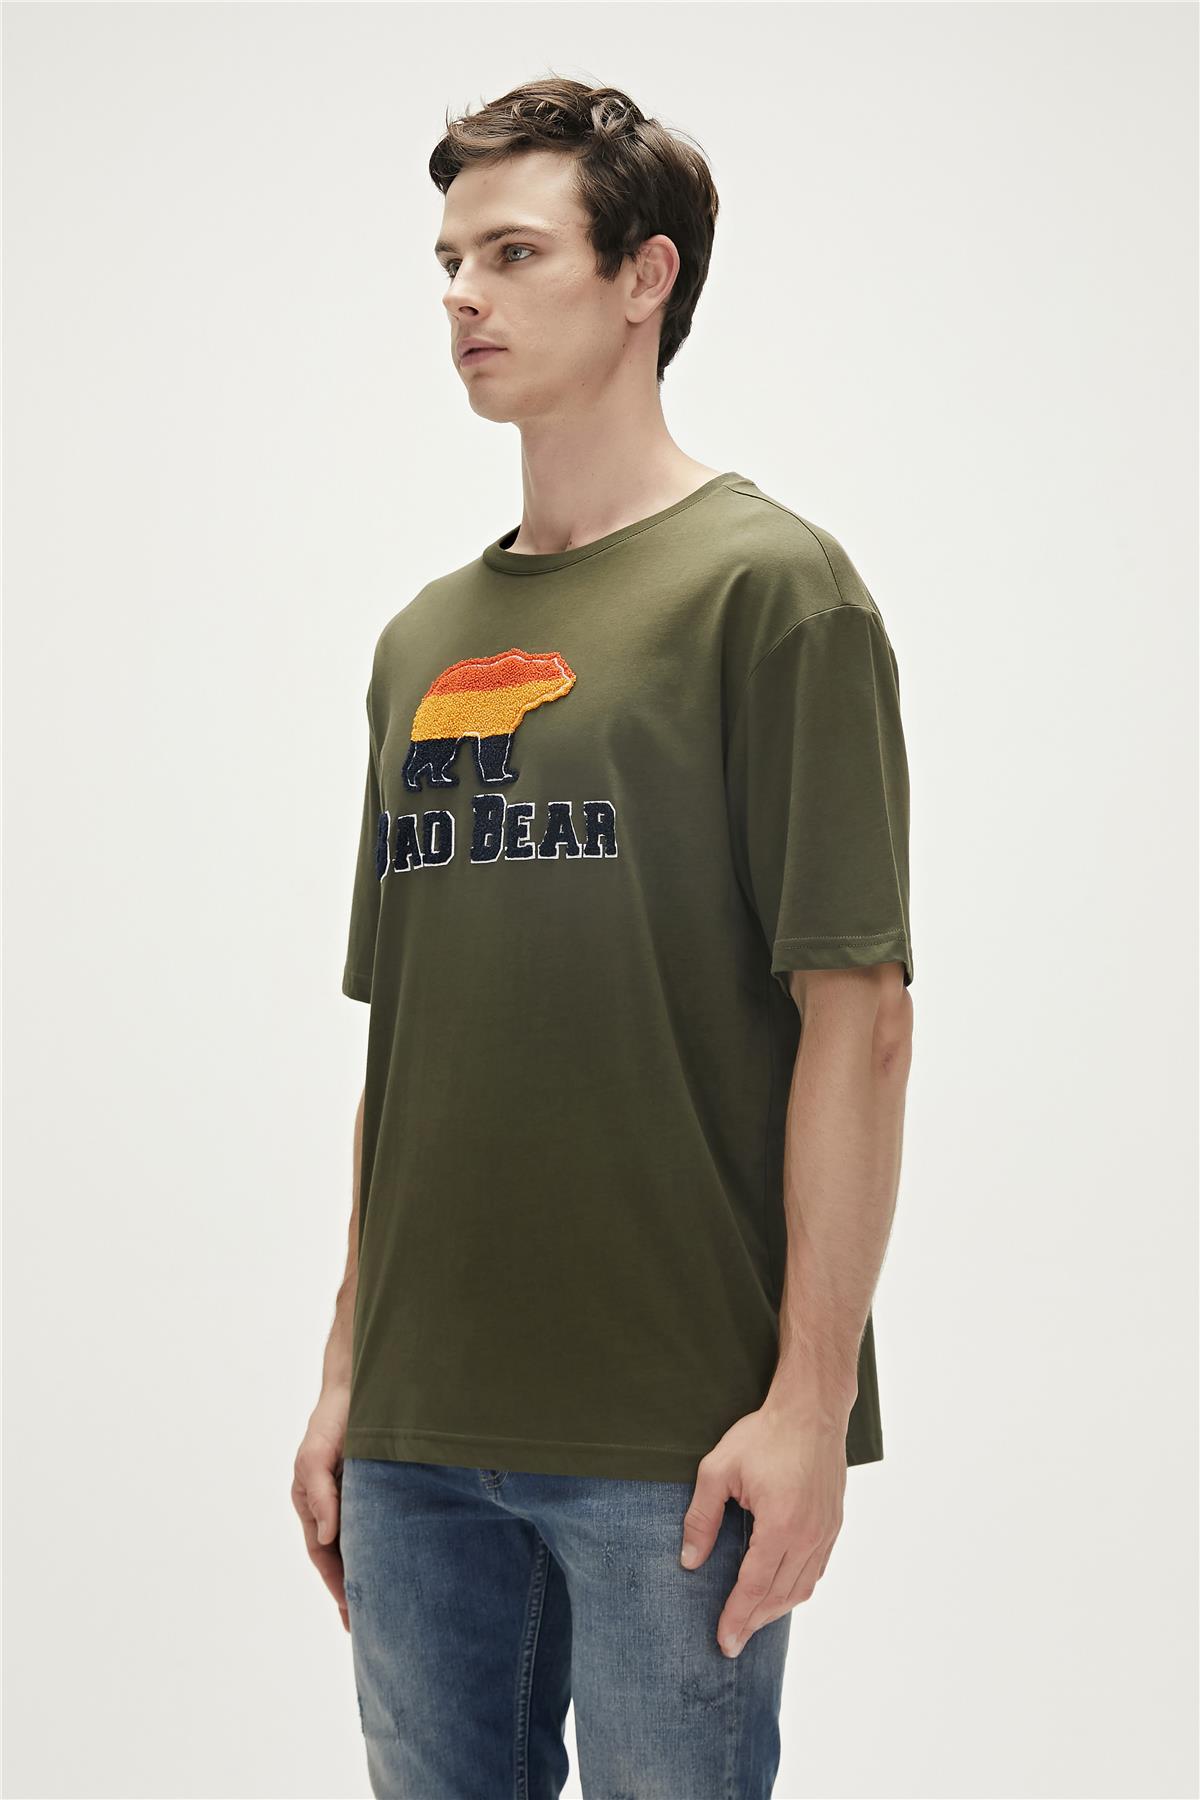 Tripart T-Shirt Yeşil 3D Baskılı Erkek Tişört |BAD BEAR